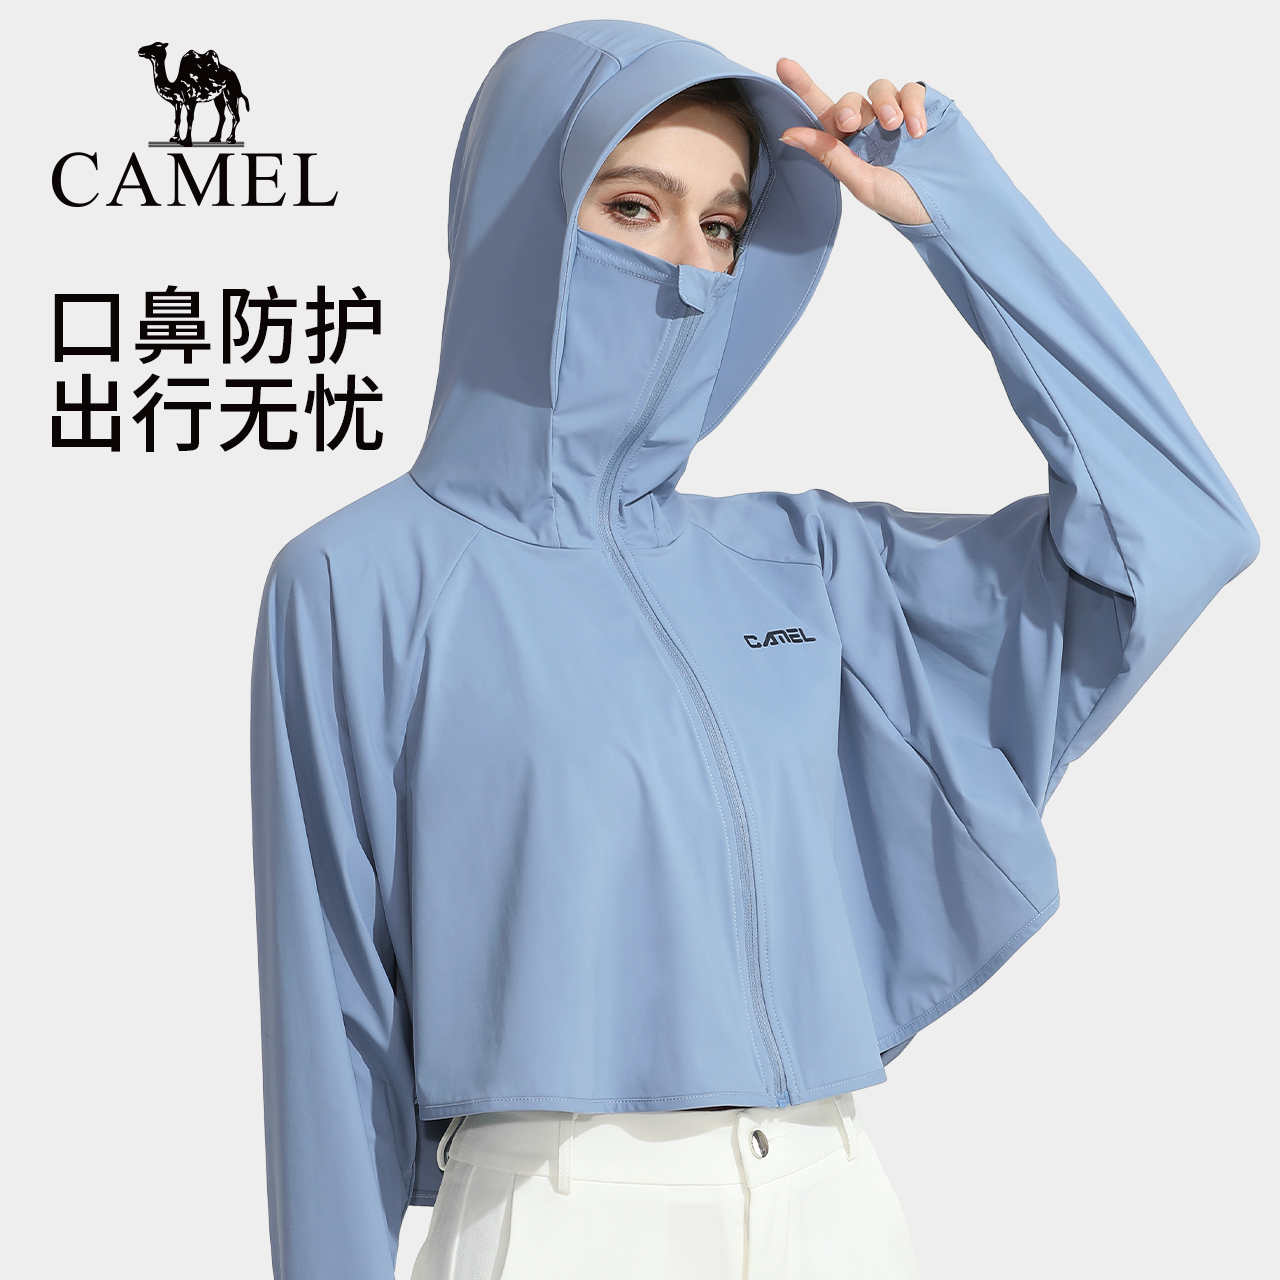 CAMEL 骆驼 防晒衣女夏季防紫外线冰丝防晒服upf50透气衫薄款 94.05元